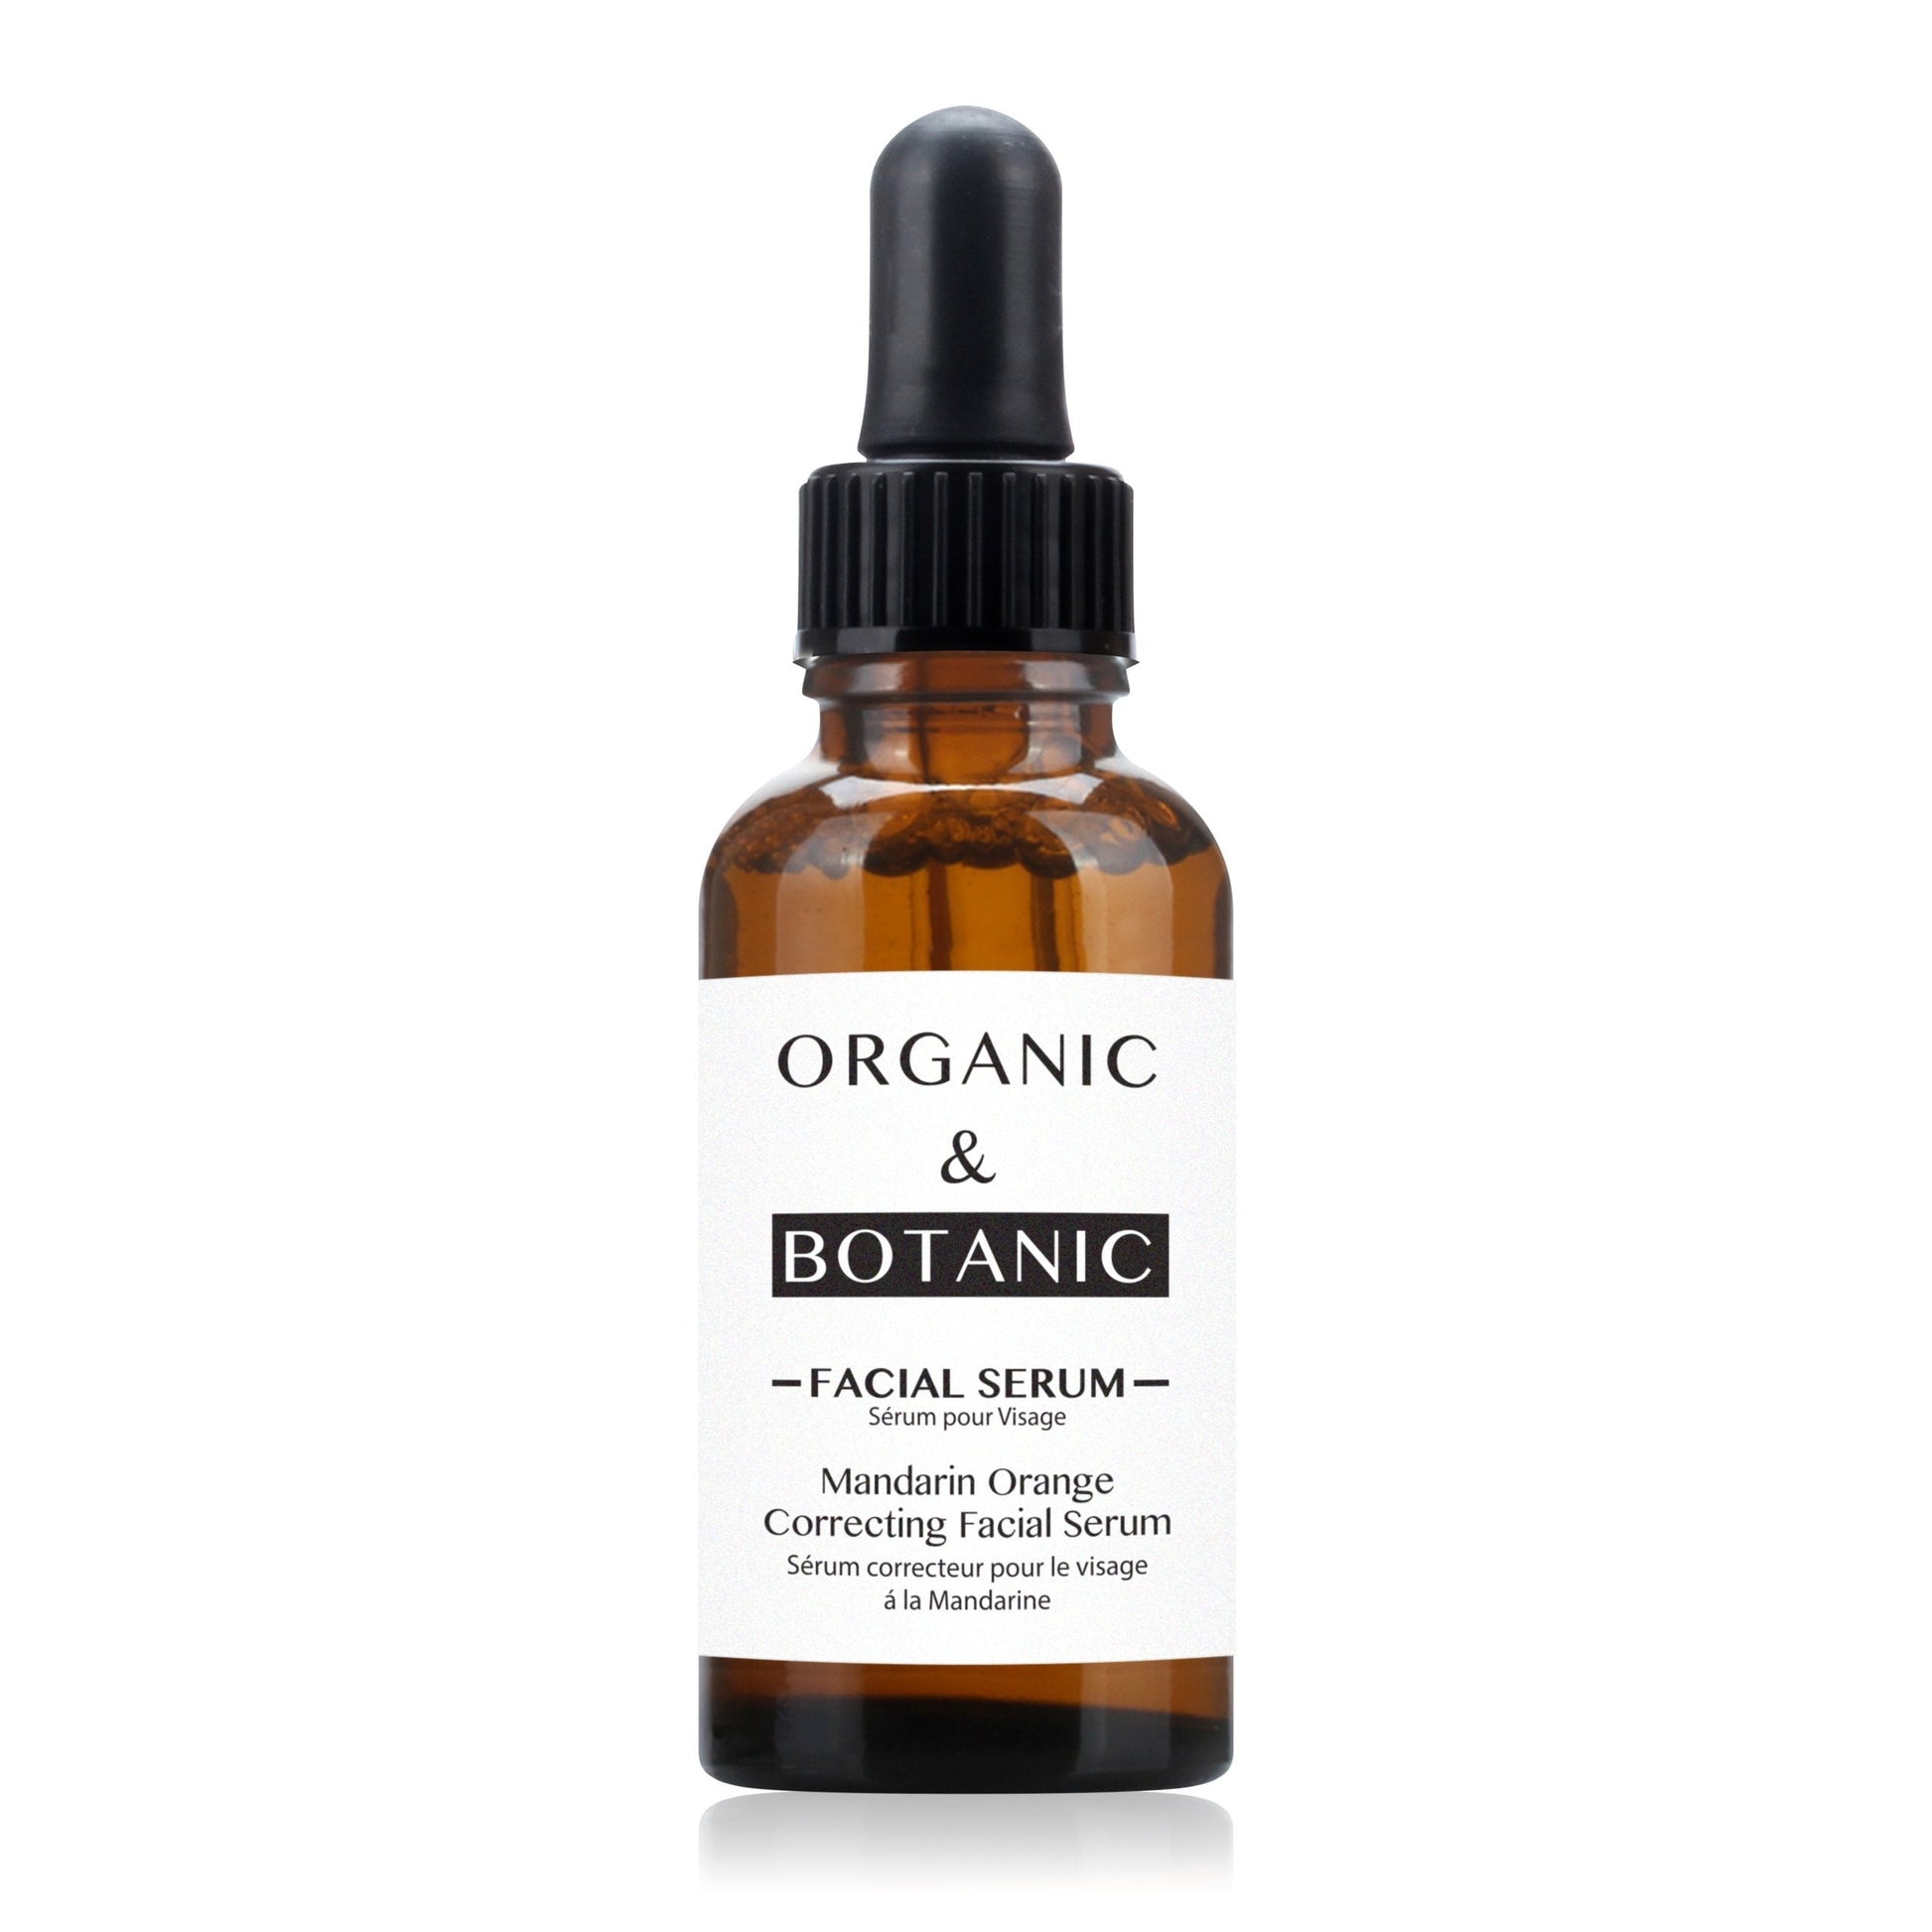 Limited Edition Mandarin Orange Correcting Facial Serum - Dr. Botanicals Skincare